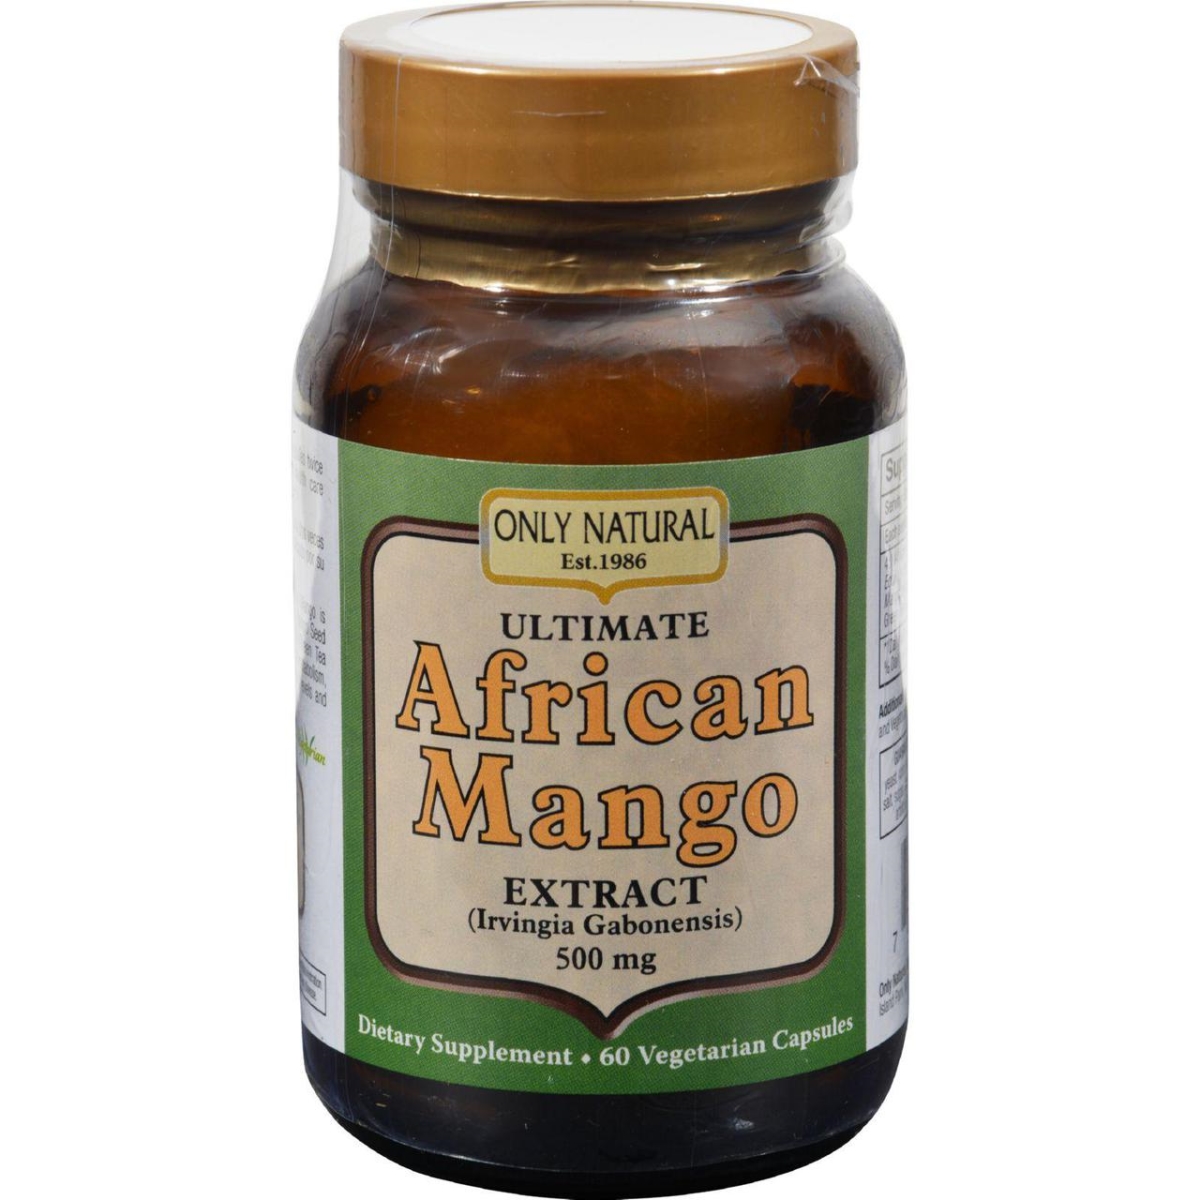 Hg0671859 500 Mg Ultimate African Mango Extract - 60 Vegetarian Capsules